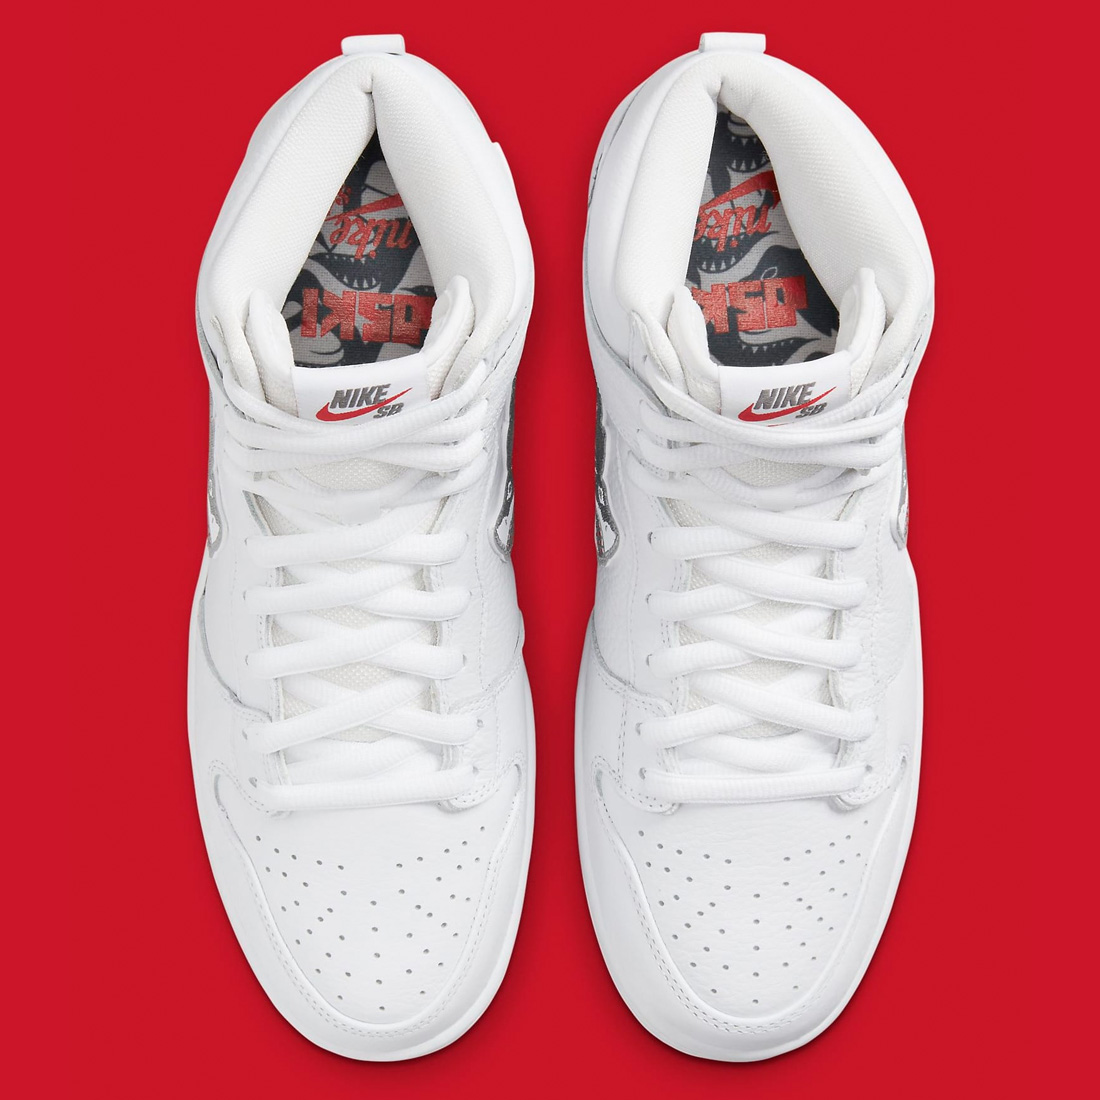 WTS] Off White x Nike Air Jordan 4 SP 'Sail', off white x Jordan 1 'UNC',  Supreme x Dunk SB 'Red Cement', Dunk SB 'Roller Derby' ALL 28cm, OG ALL :  r/sneakermarket